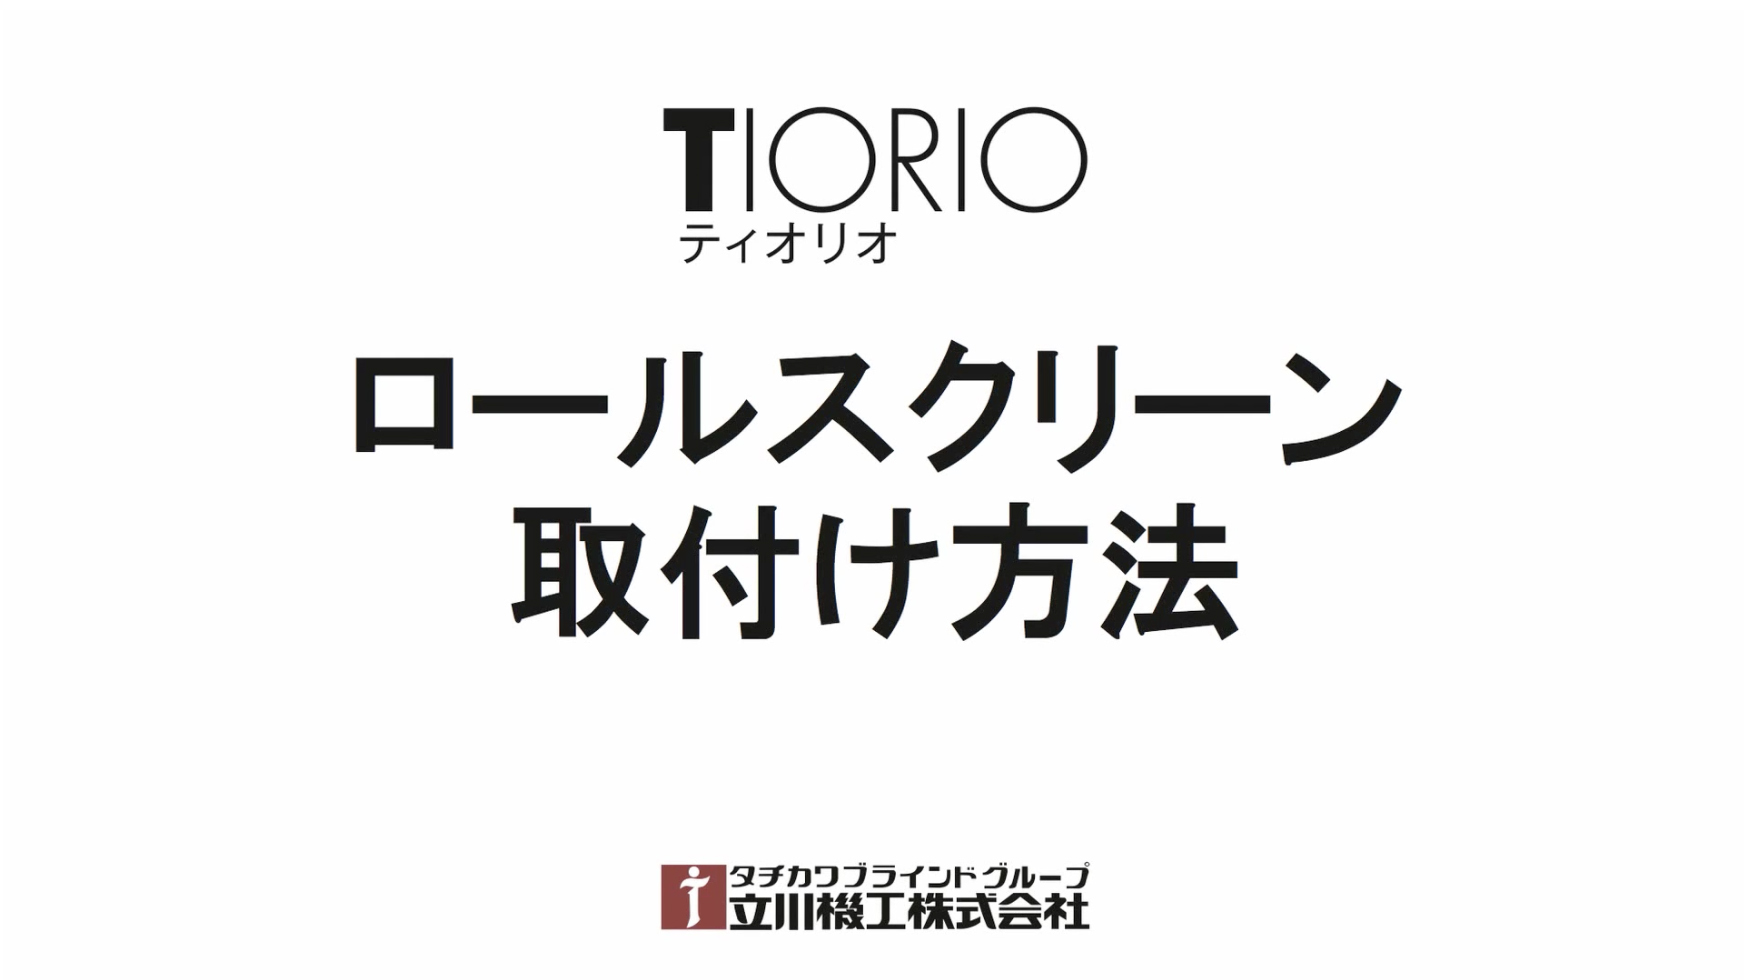 TIORIO(ティオリオ)ロールスクリーン | 立川機工株式会社